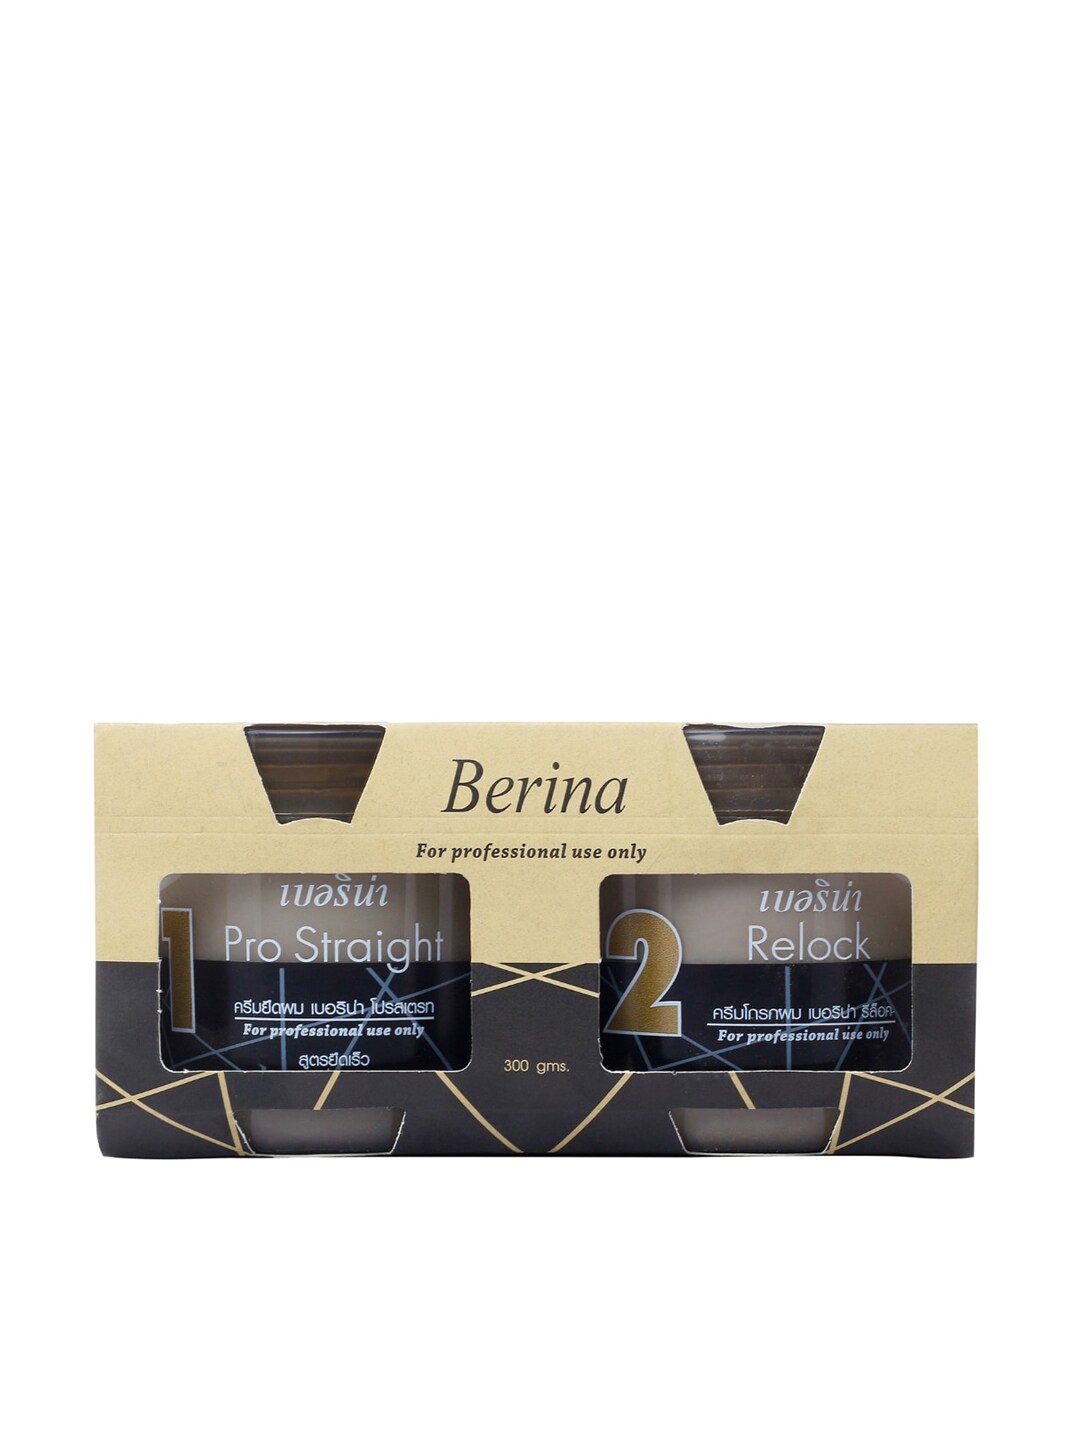 Berina Pro Straight Cream (Rebonding) 300gm Price in India